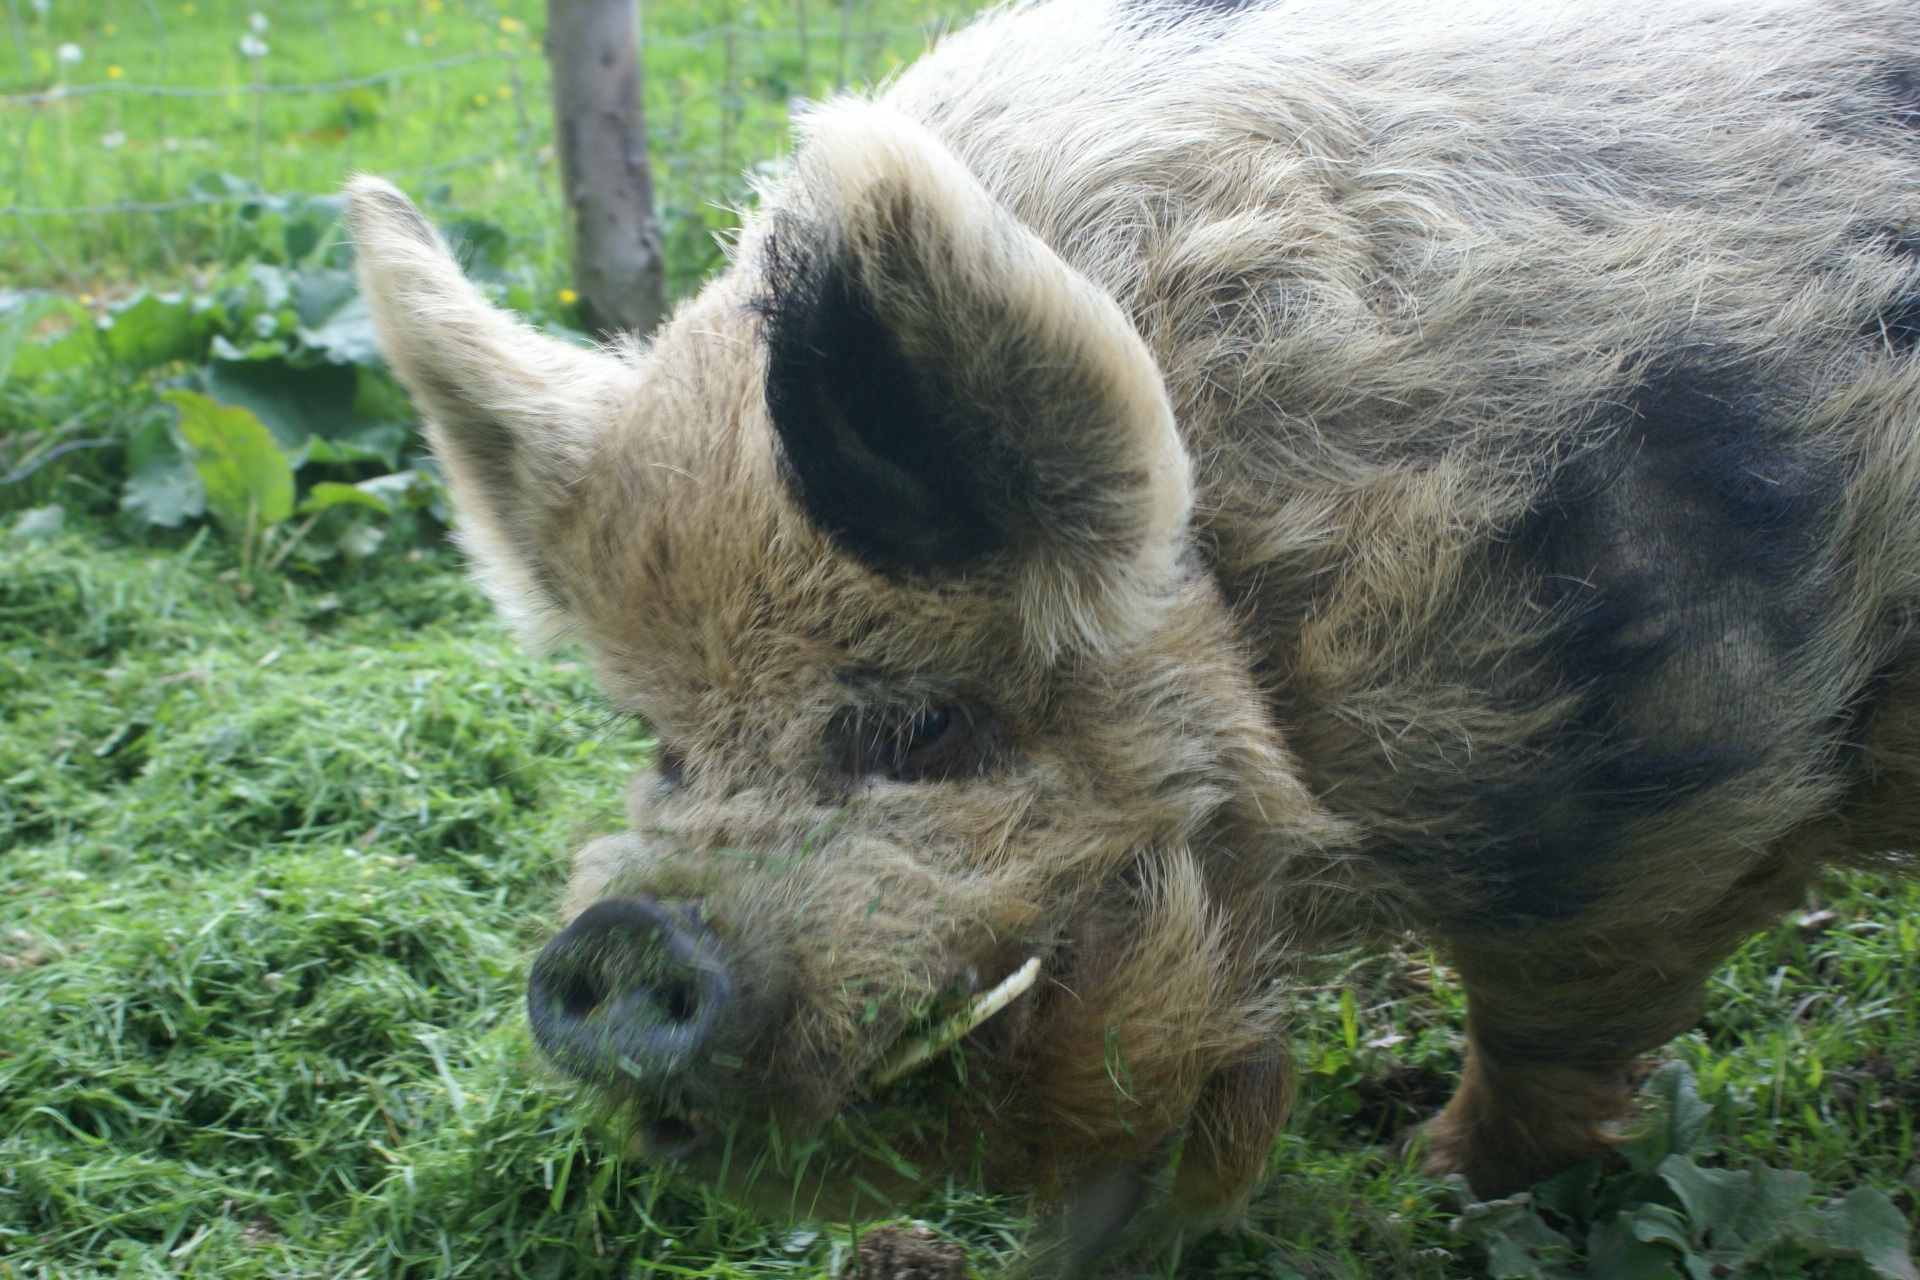 Boris, the resident pig at Eco-Gites of Lenault